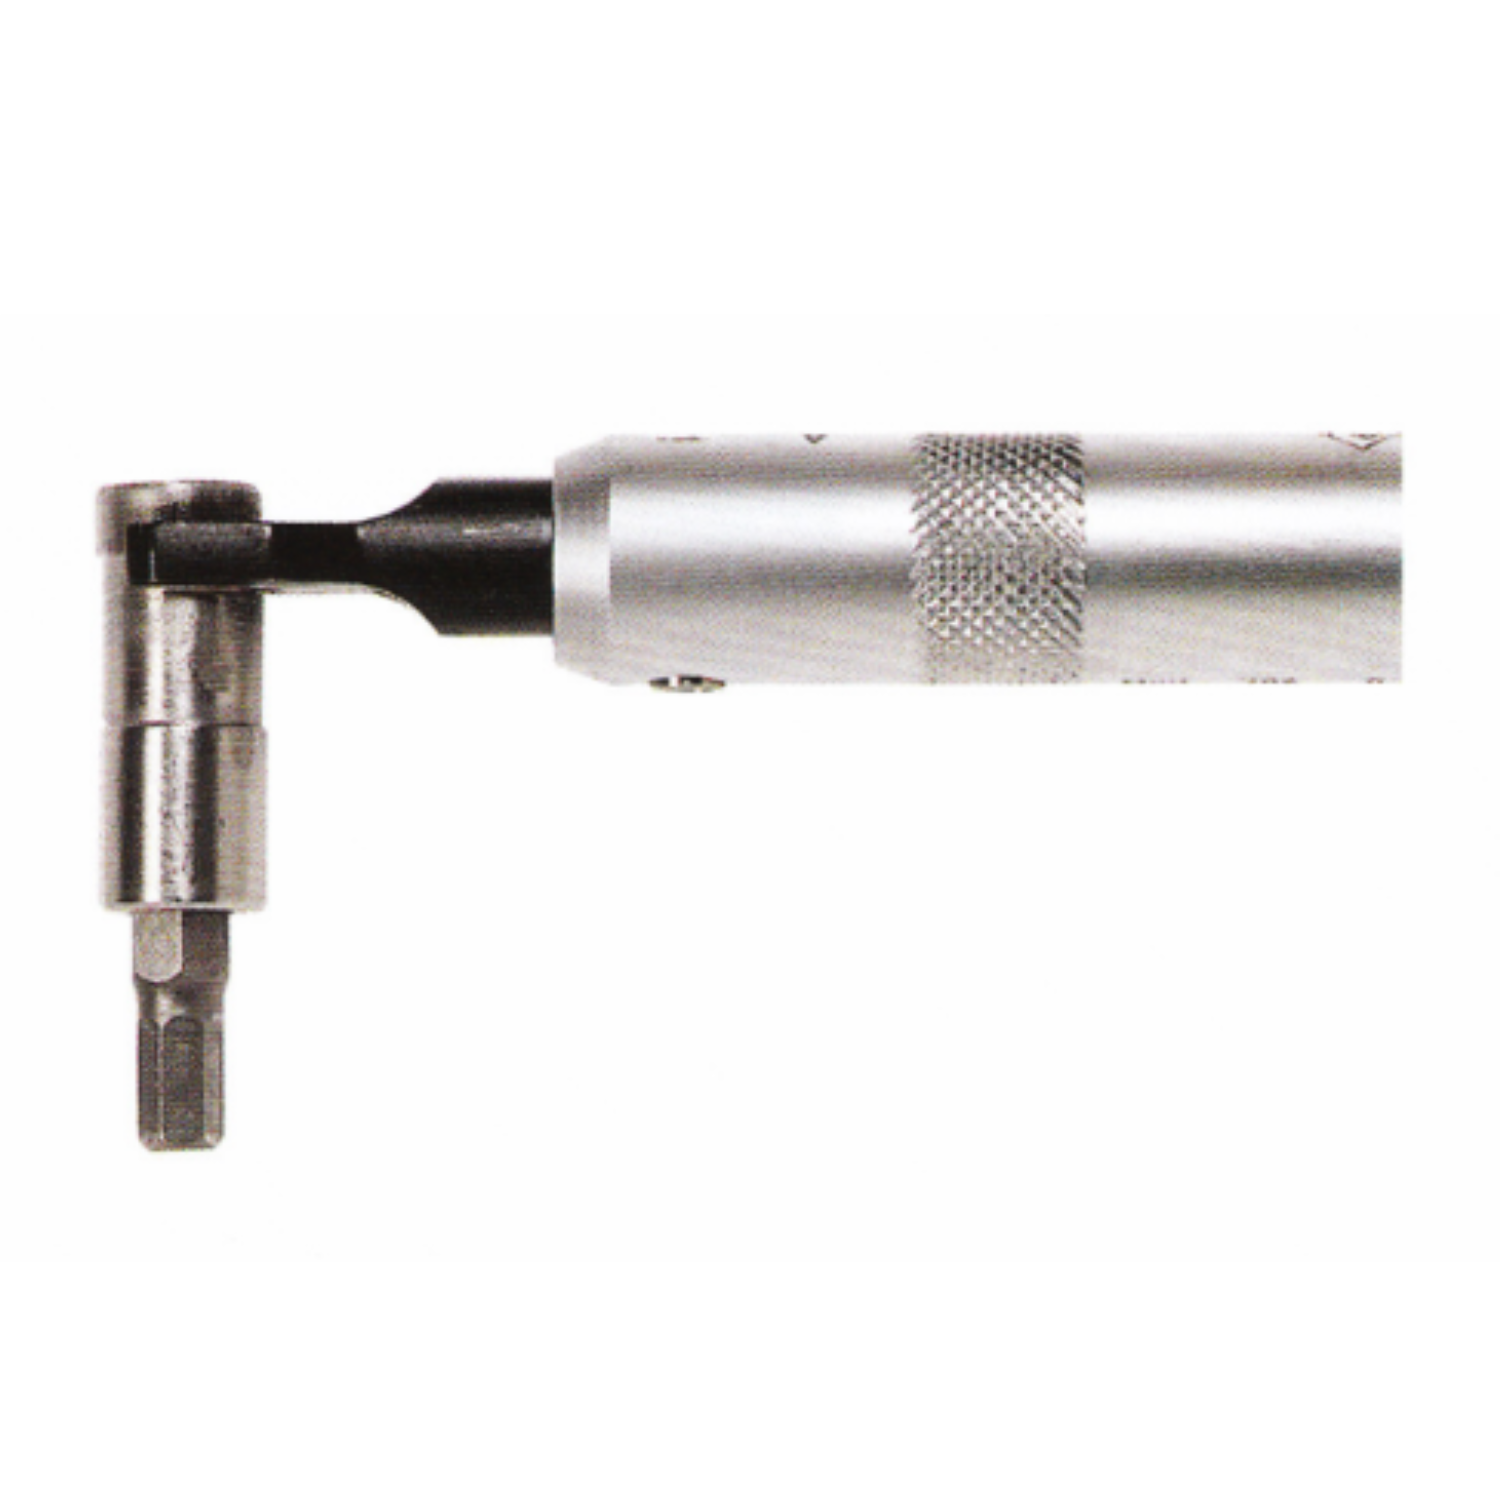 TECNOGI Bit Holder for Torque Wrench (TECNOGI Tools) - Premium Bit Holder from TECNOGI - Shop now at Yew Aik.